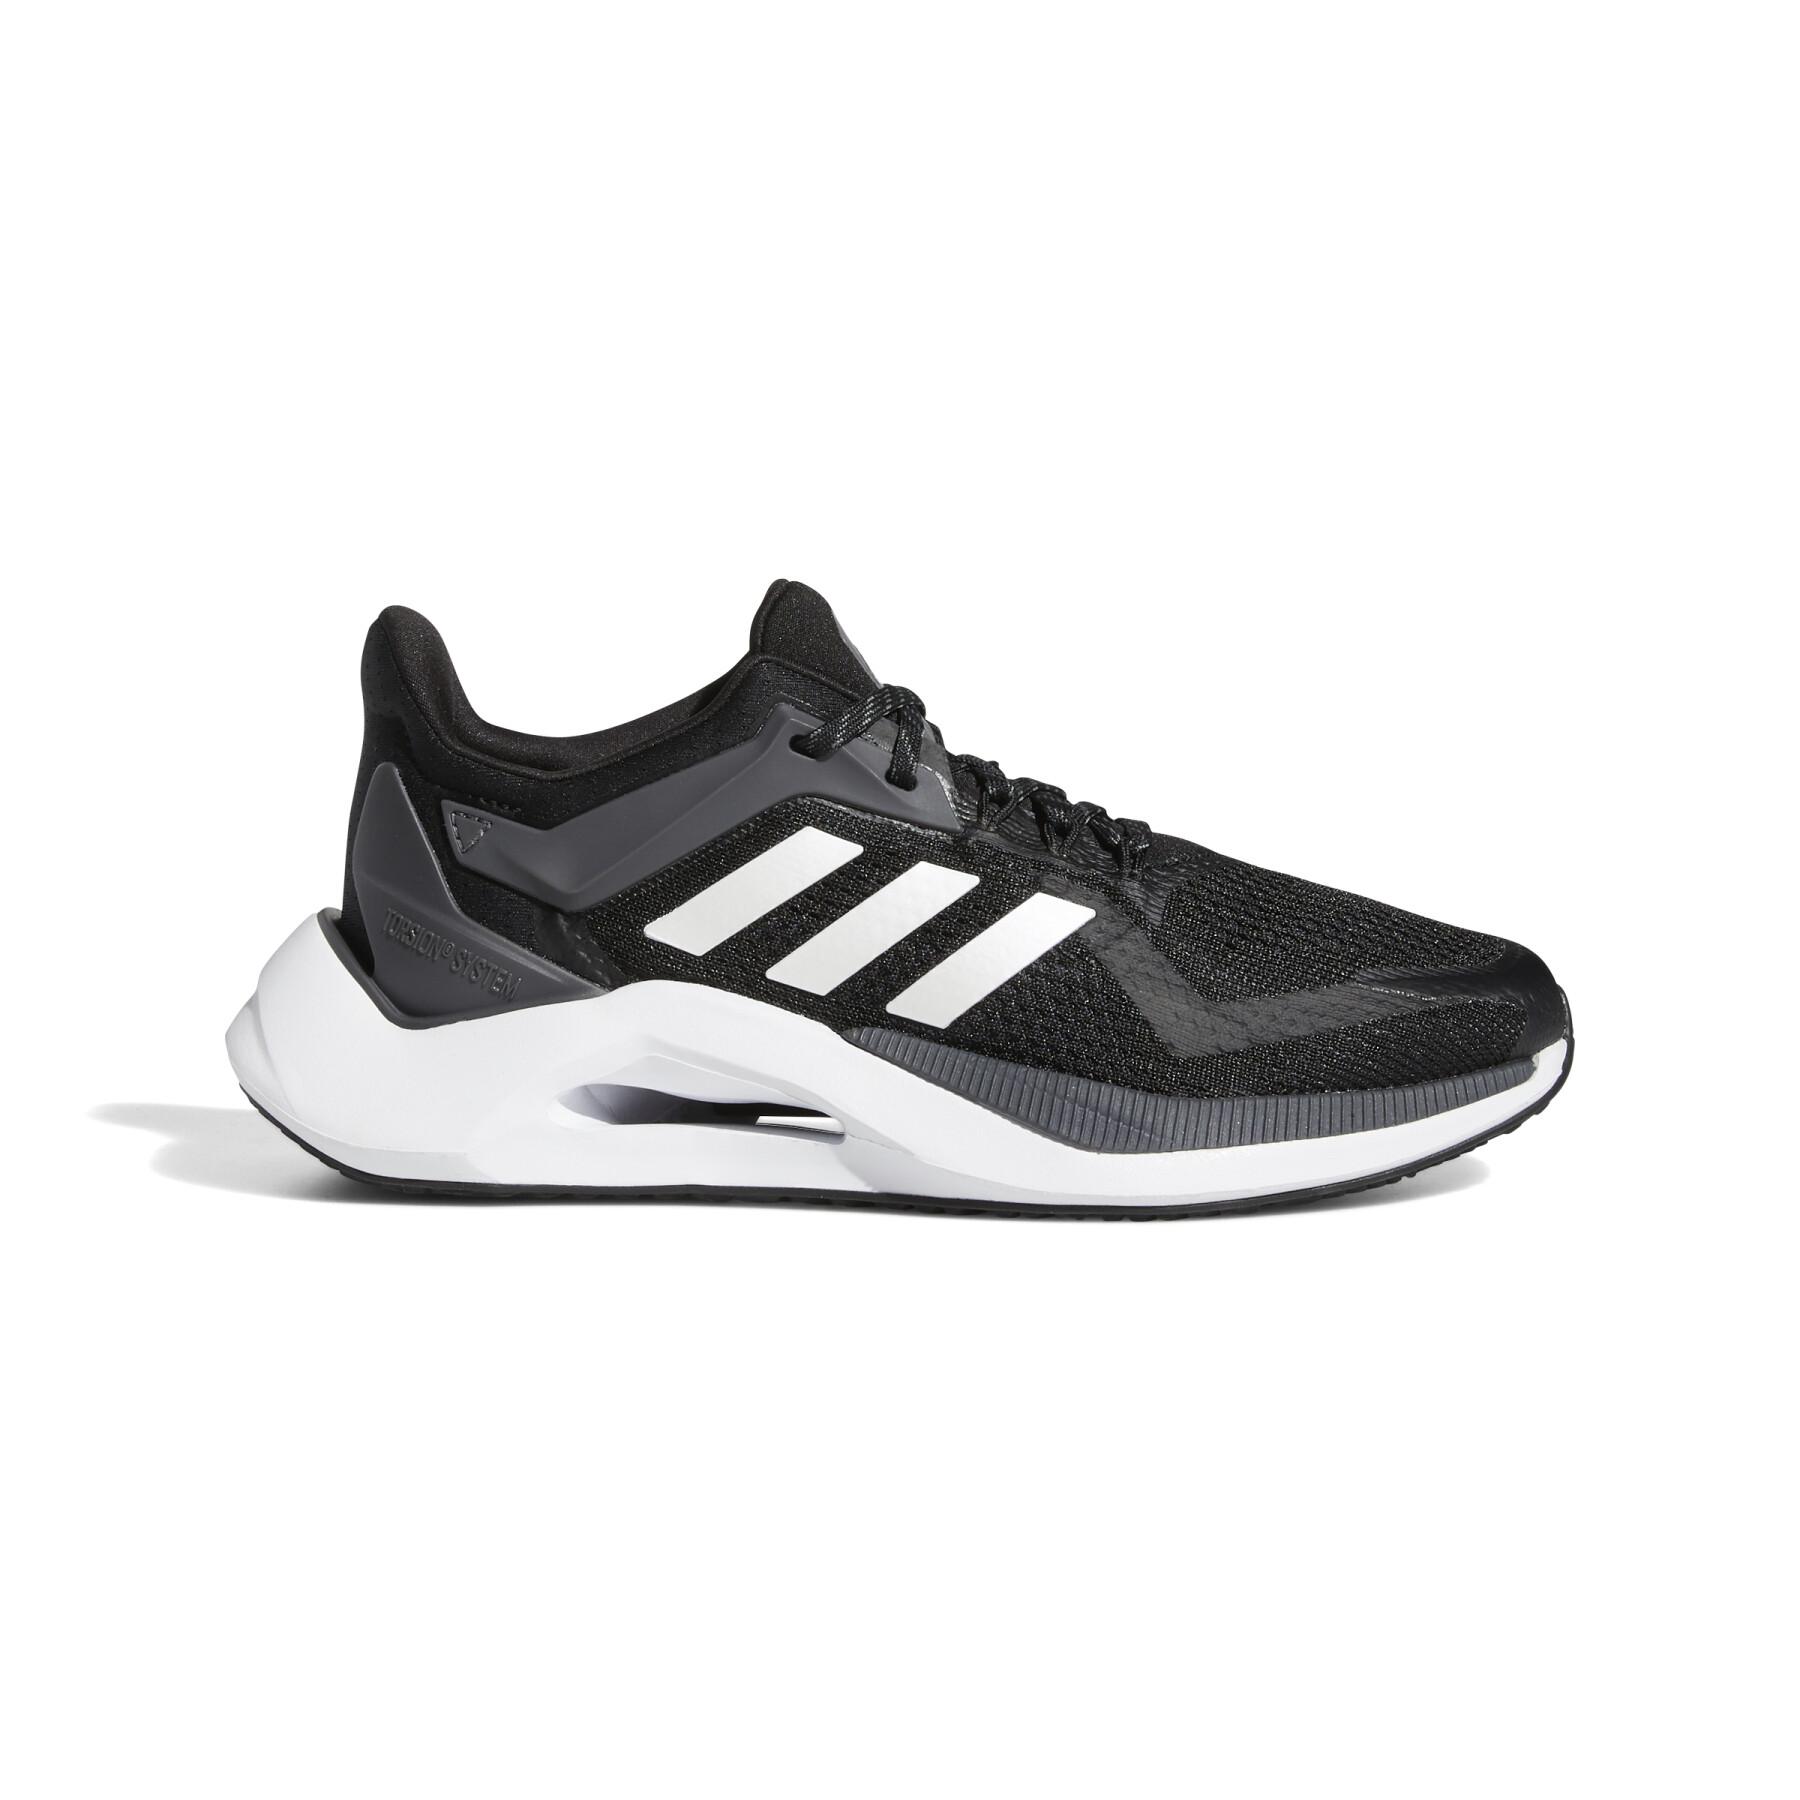 Chaussures de running adidas Alphatorsion 2.0